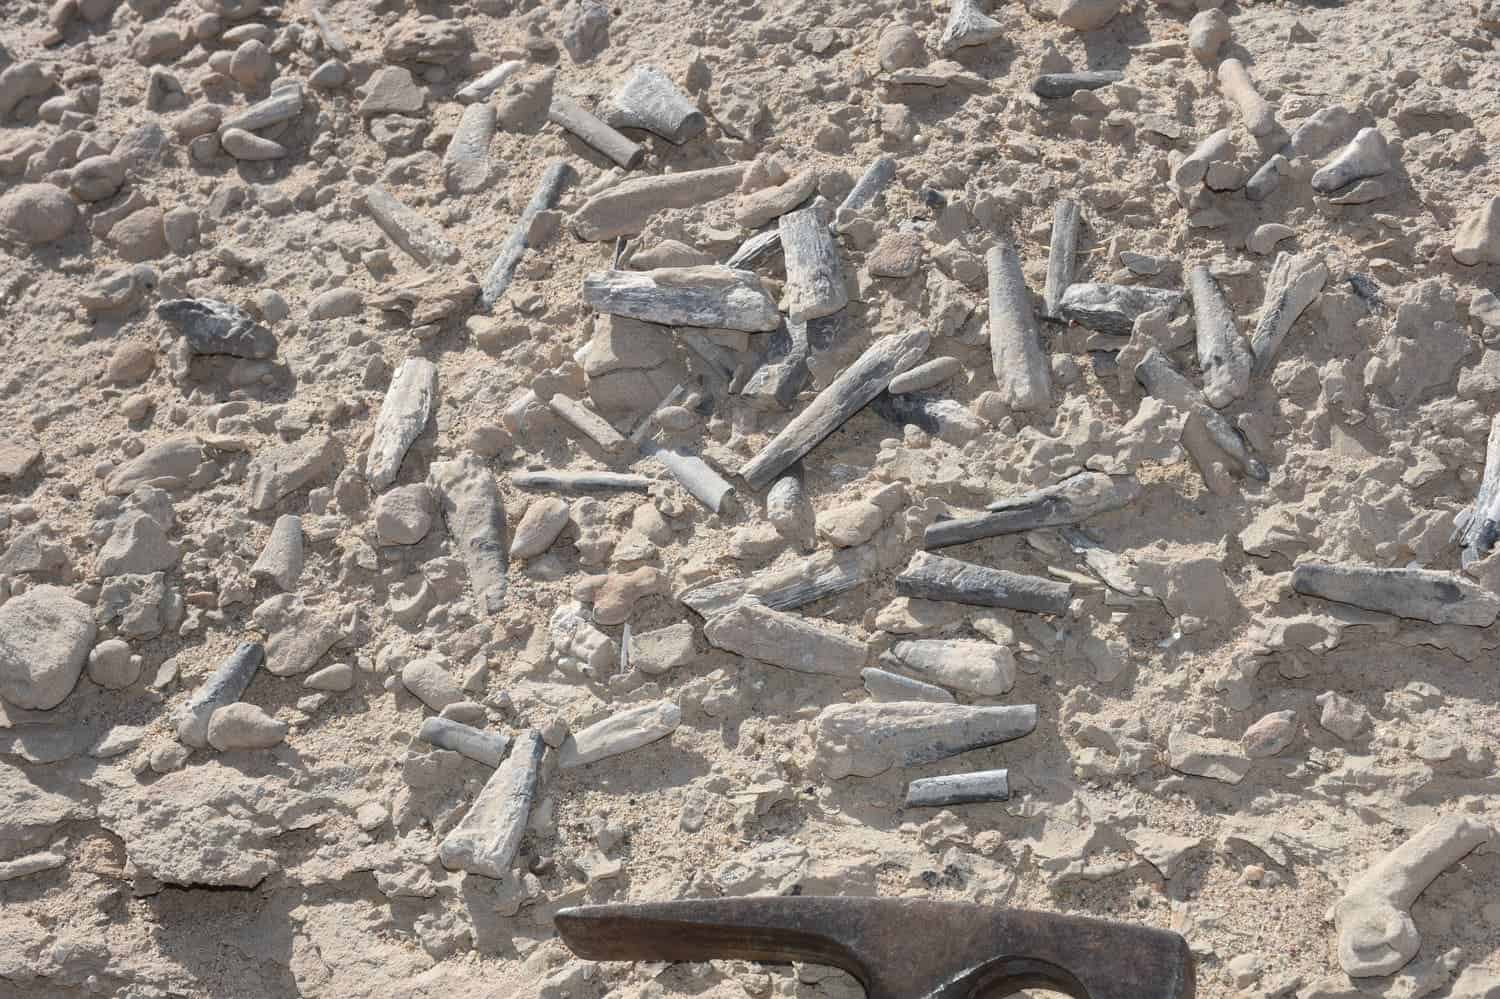 Hundreds of pterosaur eggs and bones were found at the site. Image credits: Alexander Kellner/Museu Nacional/UFRJ.